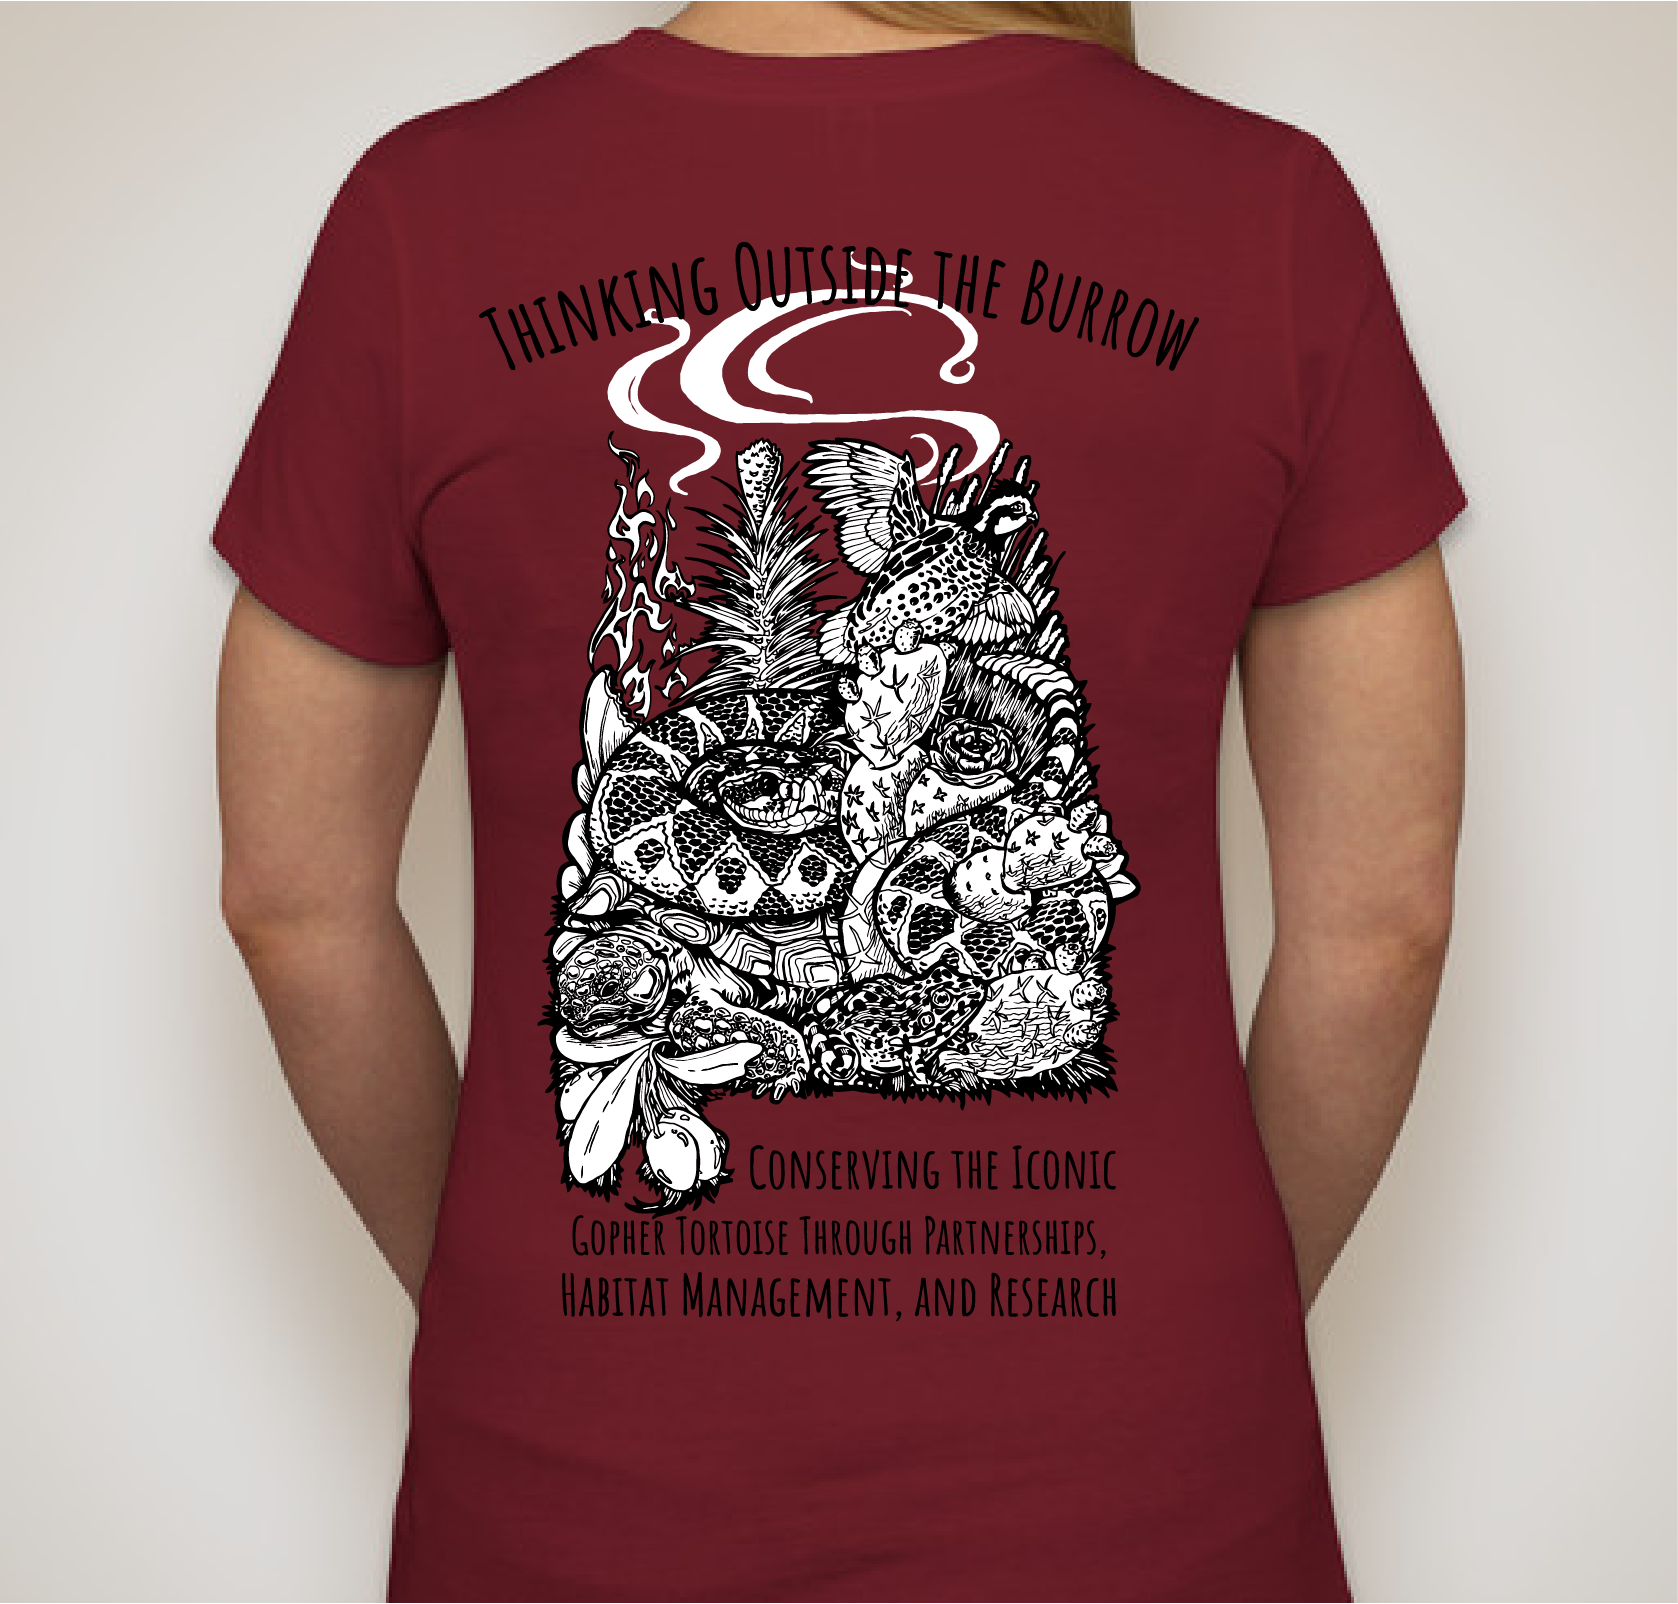 Gopher Tortoise Council 2019 "Back by Demand" Fundraiser - unisex shirt design - back